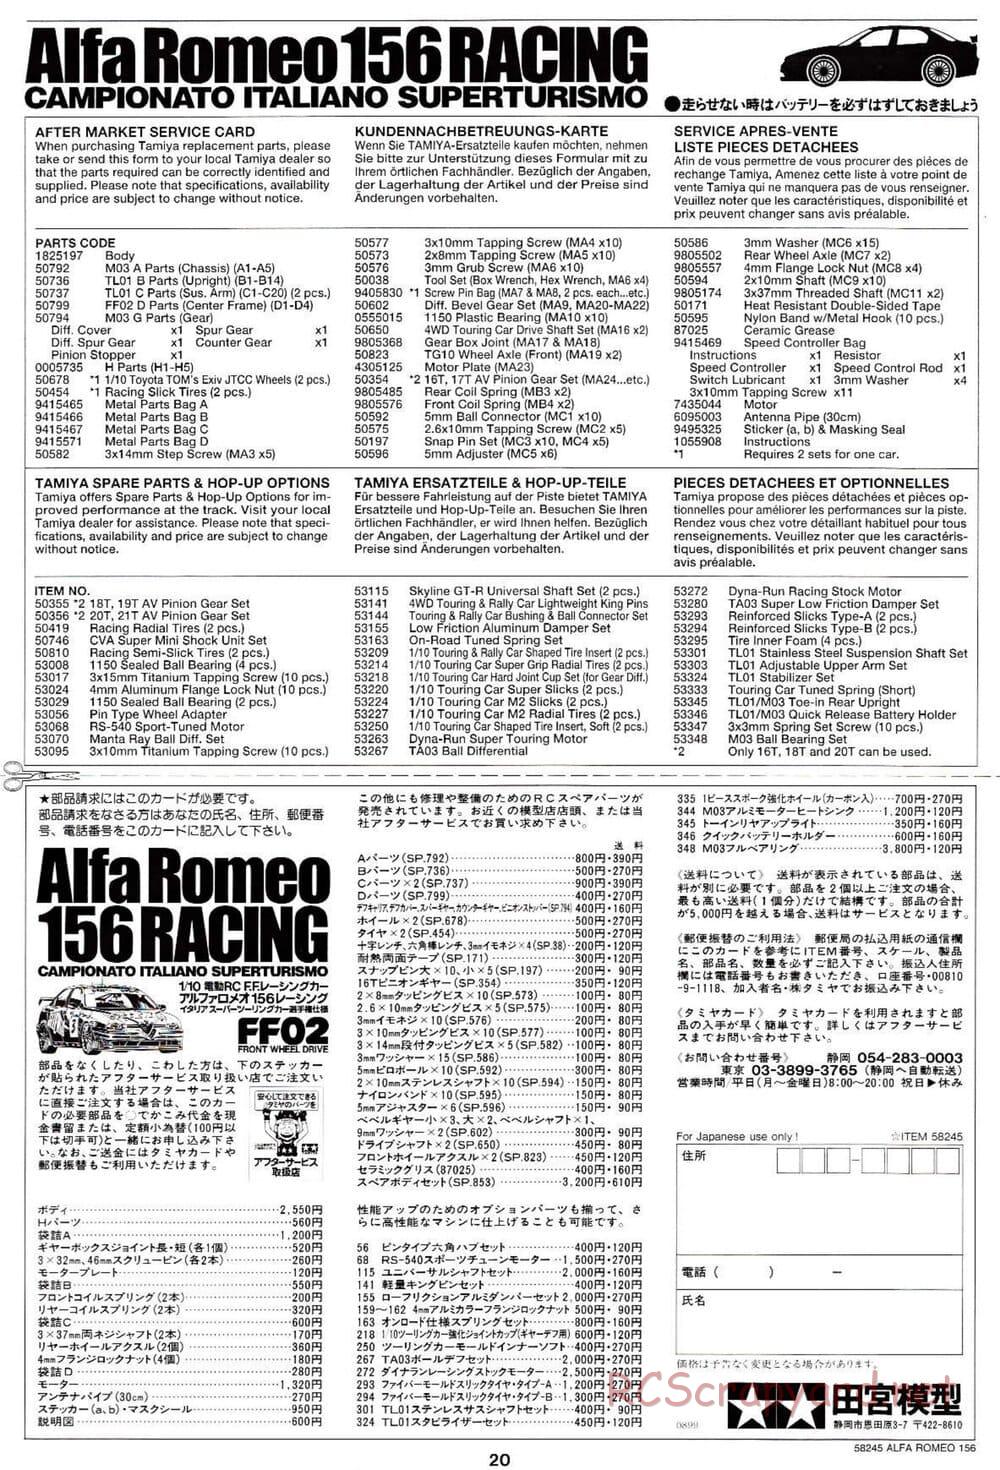 Tamiya - Alfa Romeo 156 Racing - FF-02 Chassis - Manual - Page 20